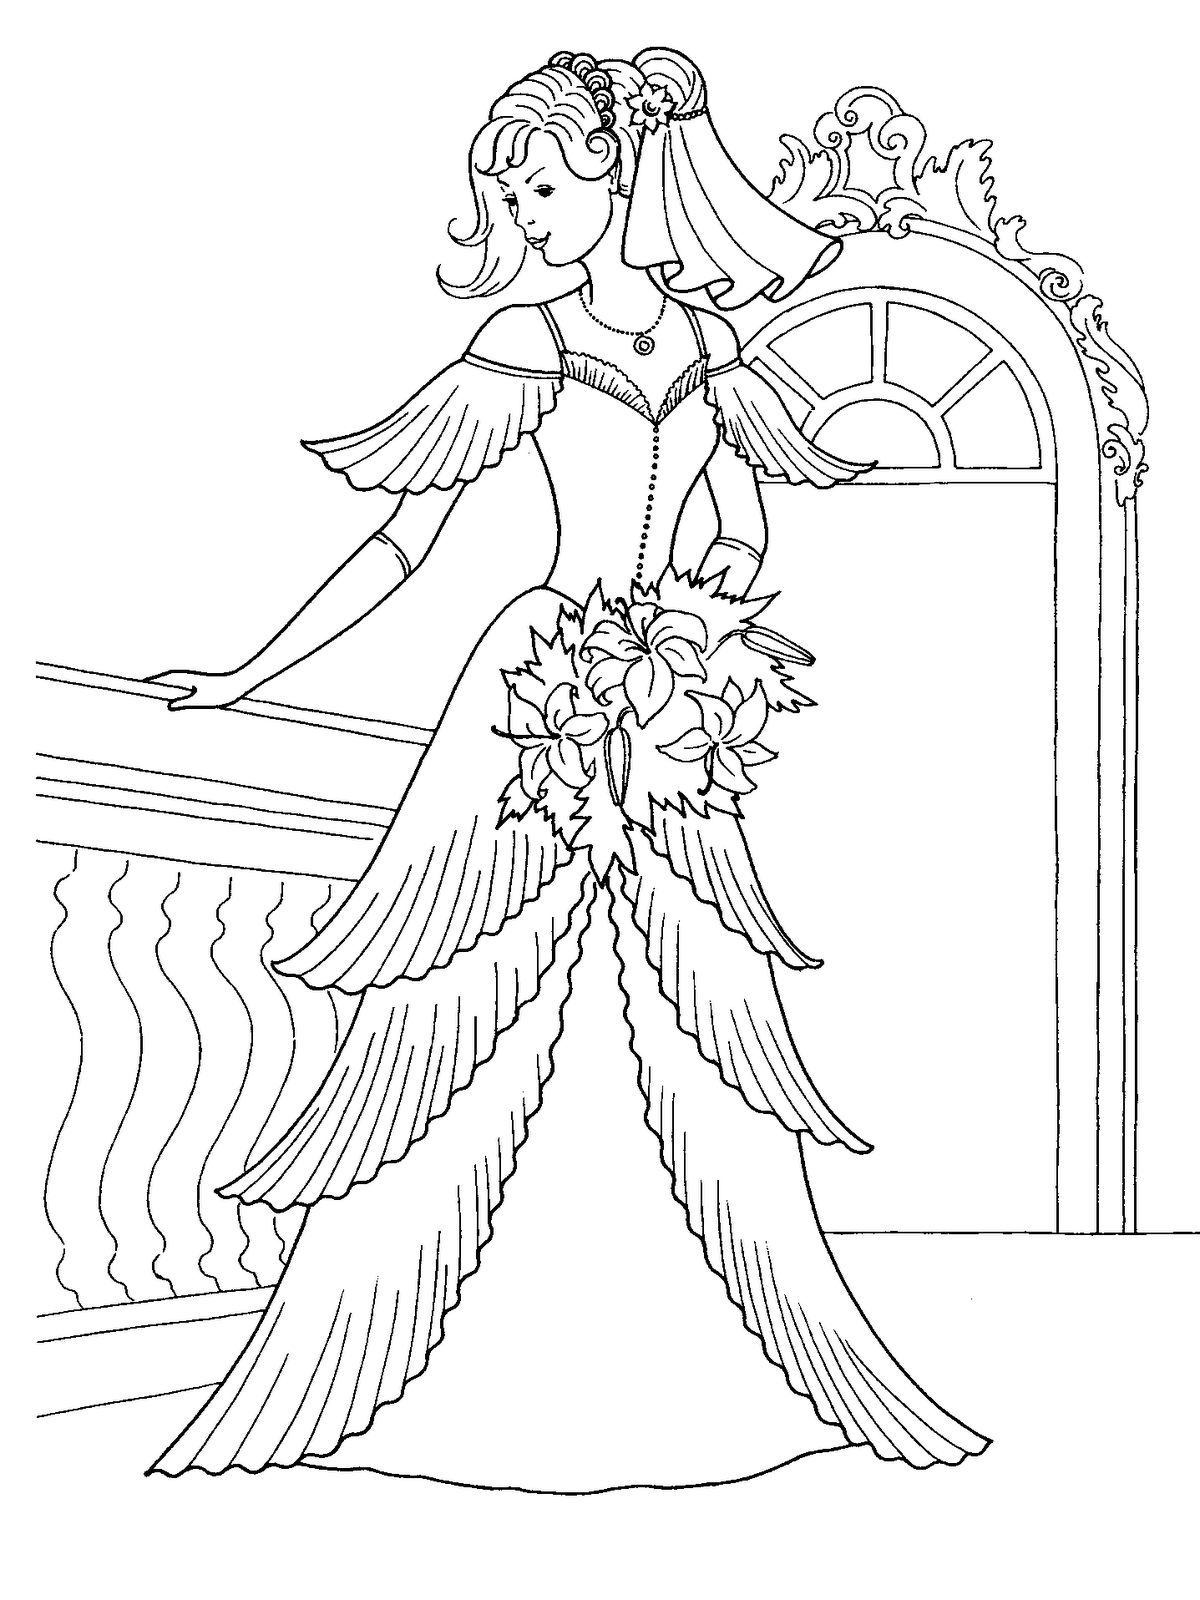 The Wedding Dresses Princess Coloring Sheet to Print Colorful Cartoon